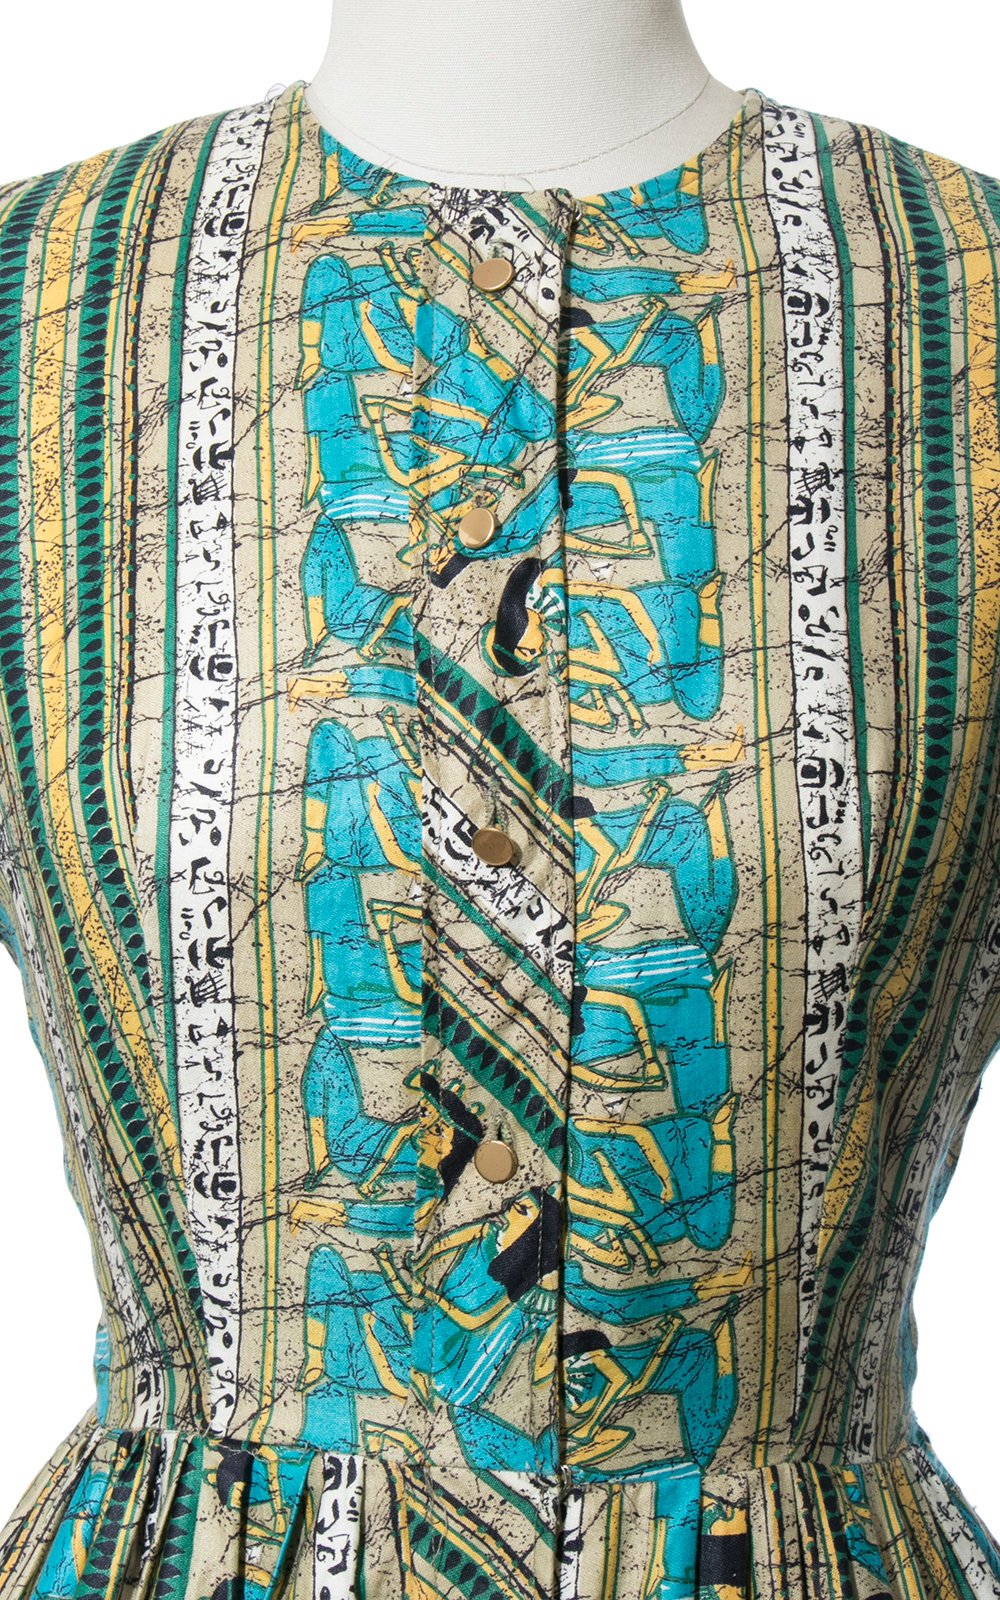 Vintage 1950s 1960s Dress | 50s 60s Egyptian Novelty Print Cotton Shirt Dress Full Skirt Shirtwaist Day Dress (medium/large)